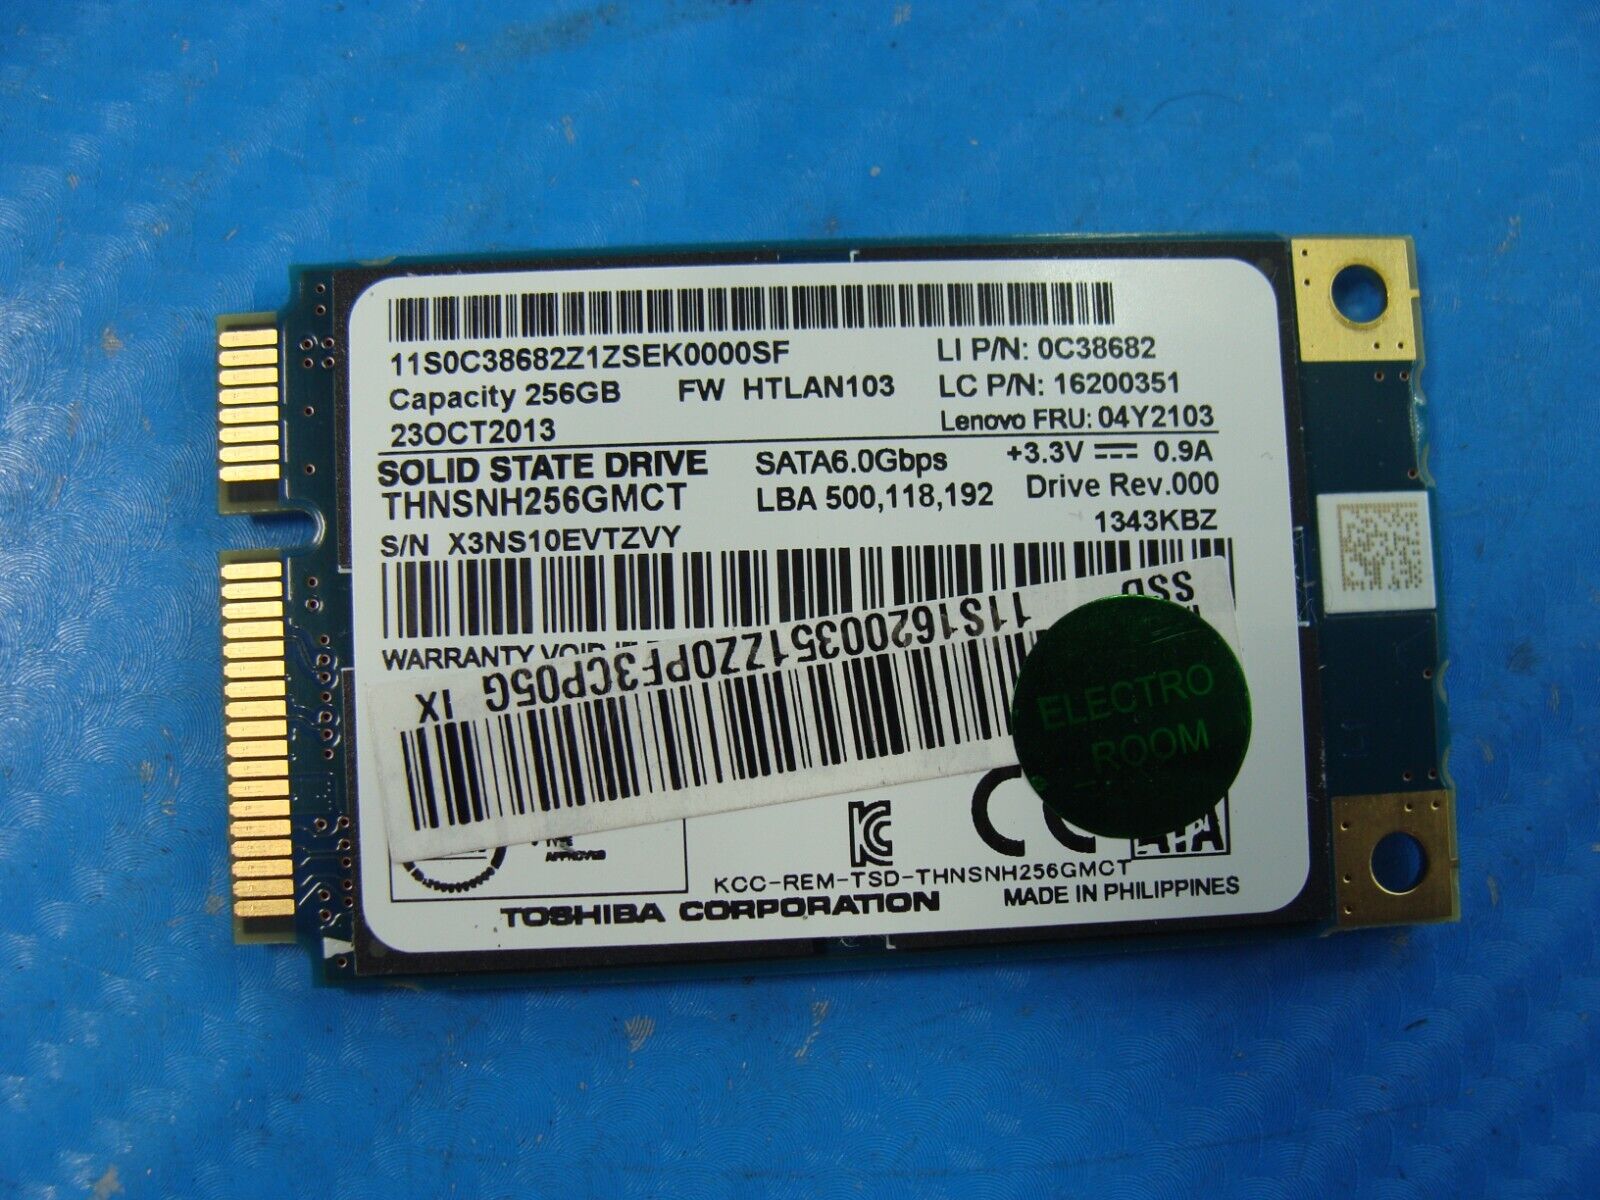 Lenovo 20266 Toshiba 256GB mSATA SSD Solid State Drive THNSNH256GMCT 04Y2103